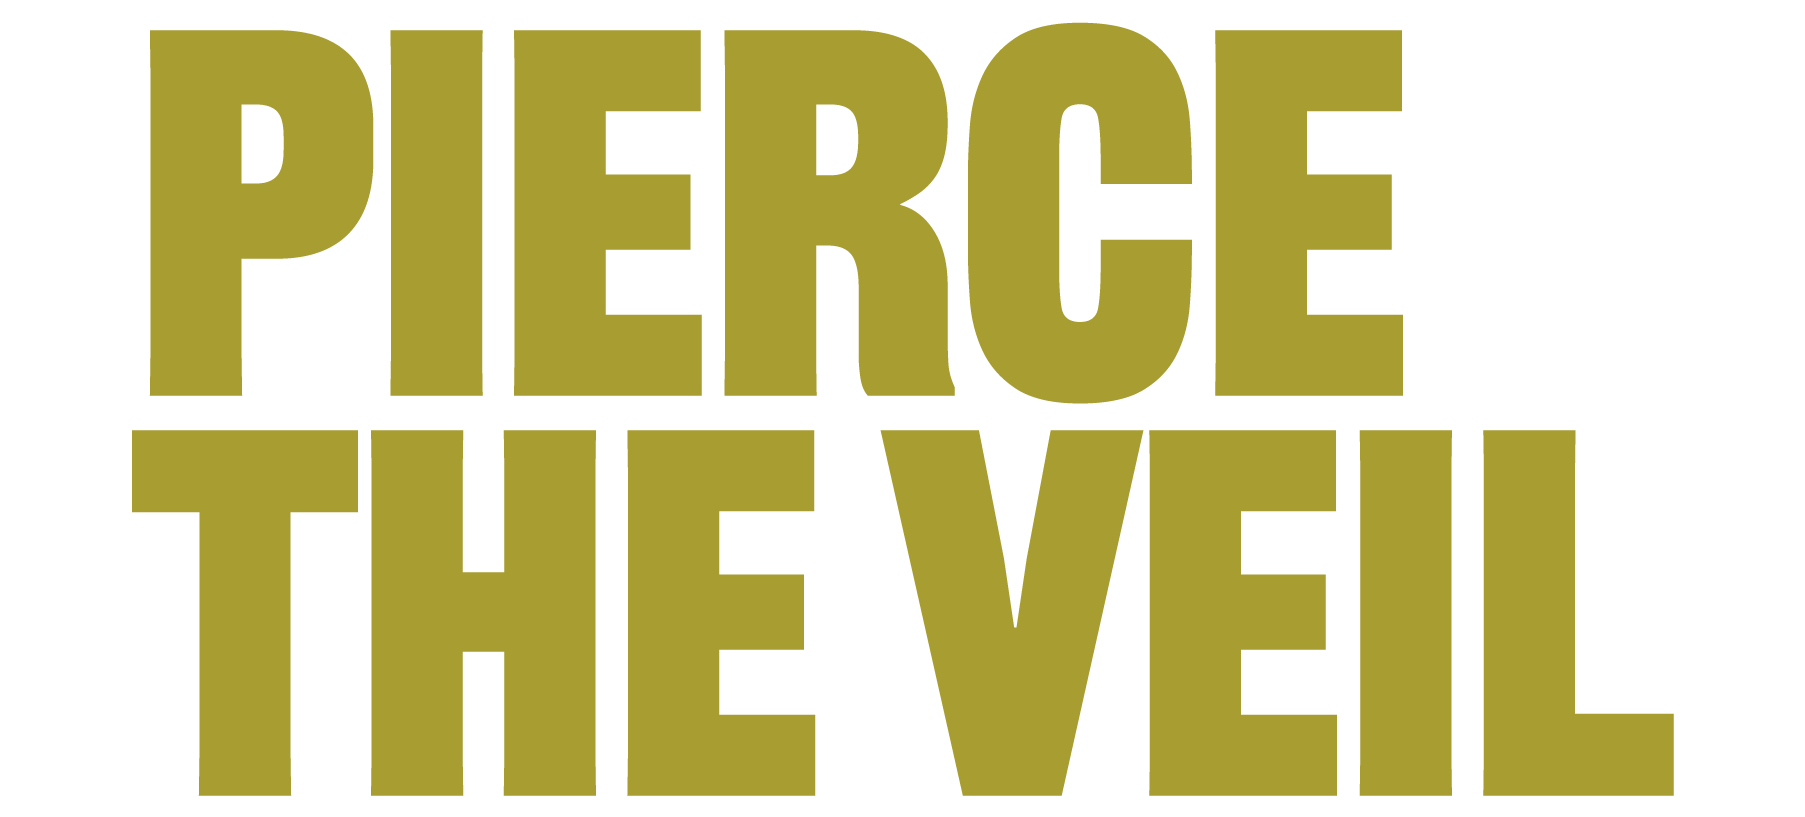 Pierce The Veil logo